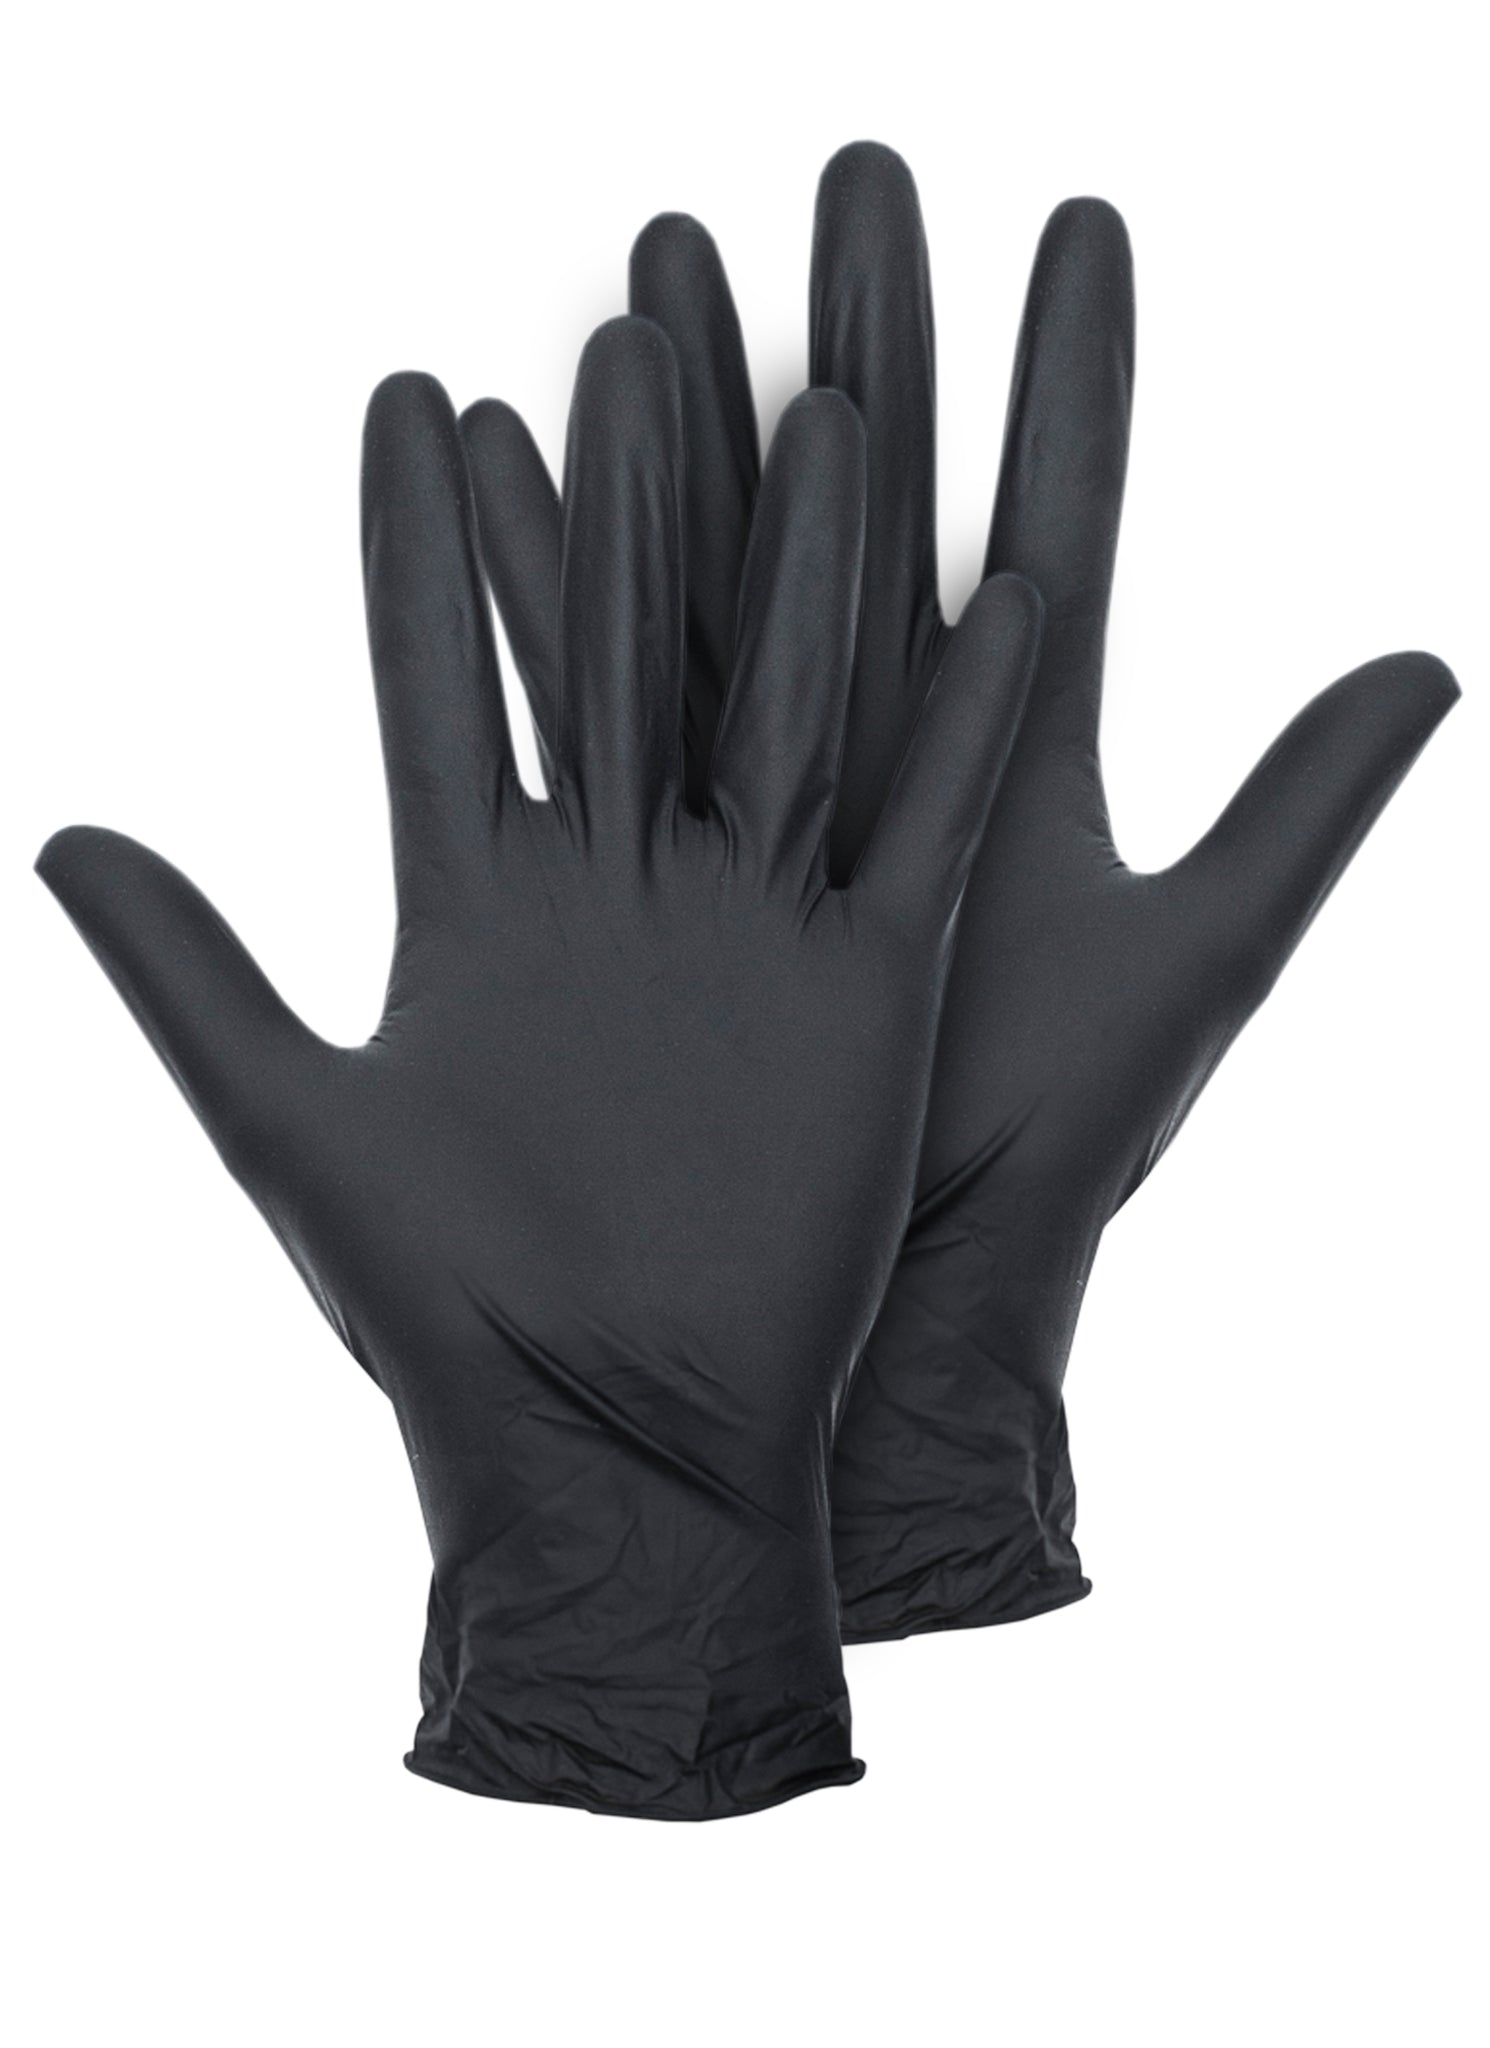 Montana - Black Latex Gloves  Size Large Box of 100